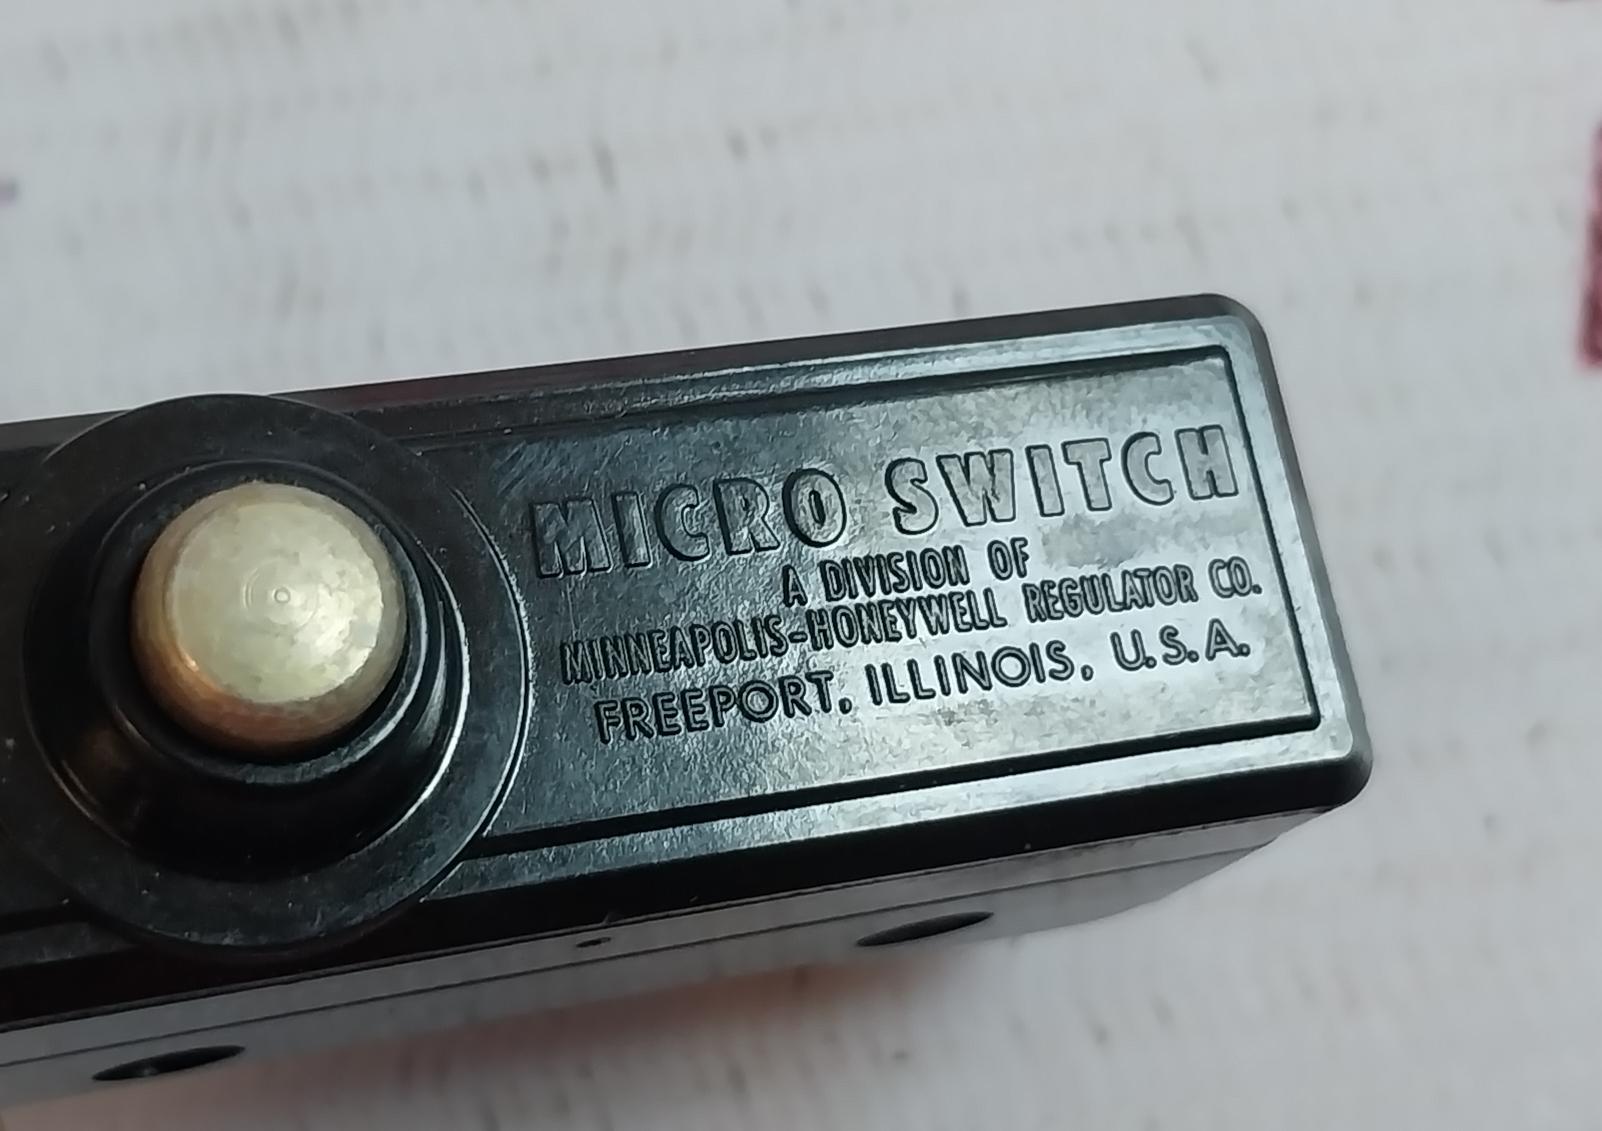 Honeywell Bz-2Rd-p1 Micro Switch